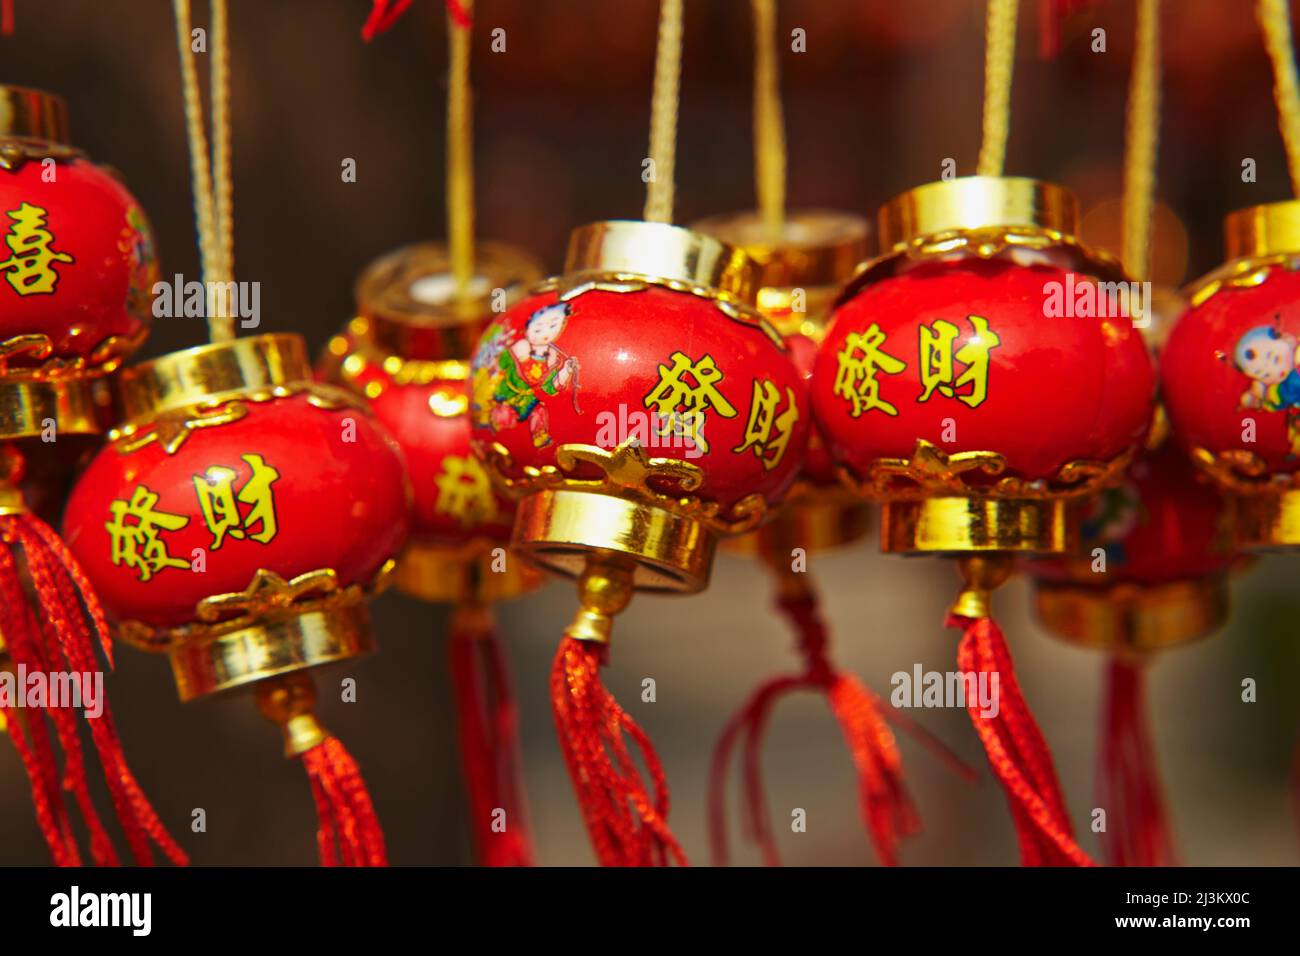 Good wishes trinkets for sale at Jiming Temple, Nanjing, Jiangsu province, China.; Jiming Temple, Nanjing, Jiangsu province, China. Stock Photo